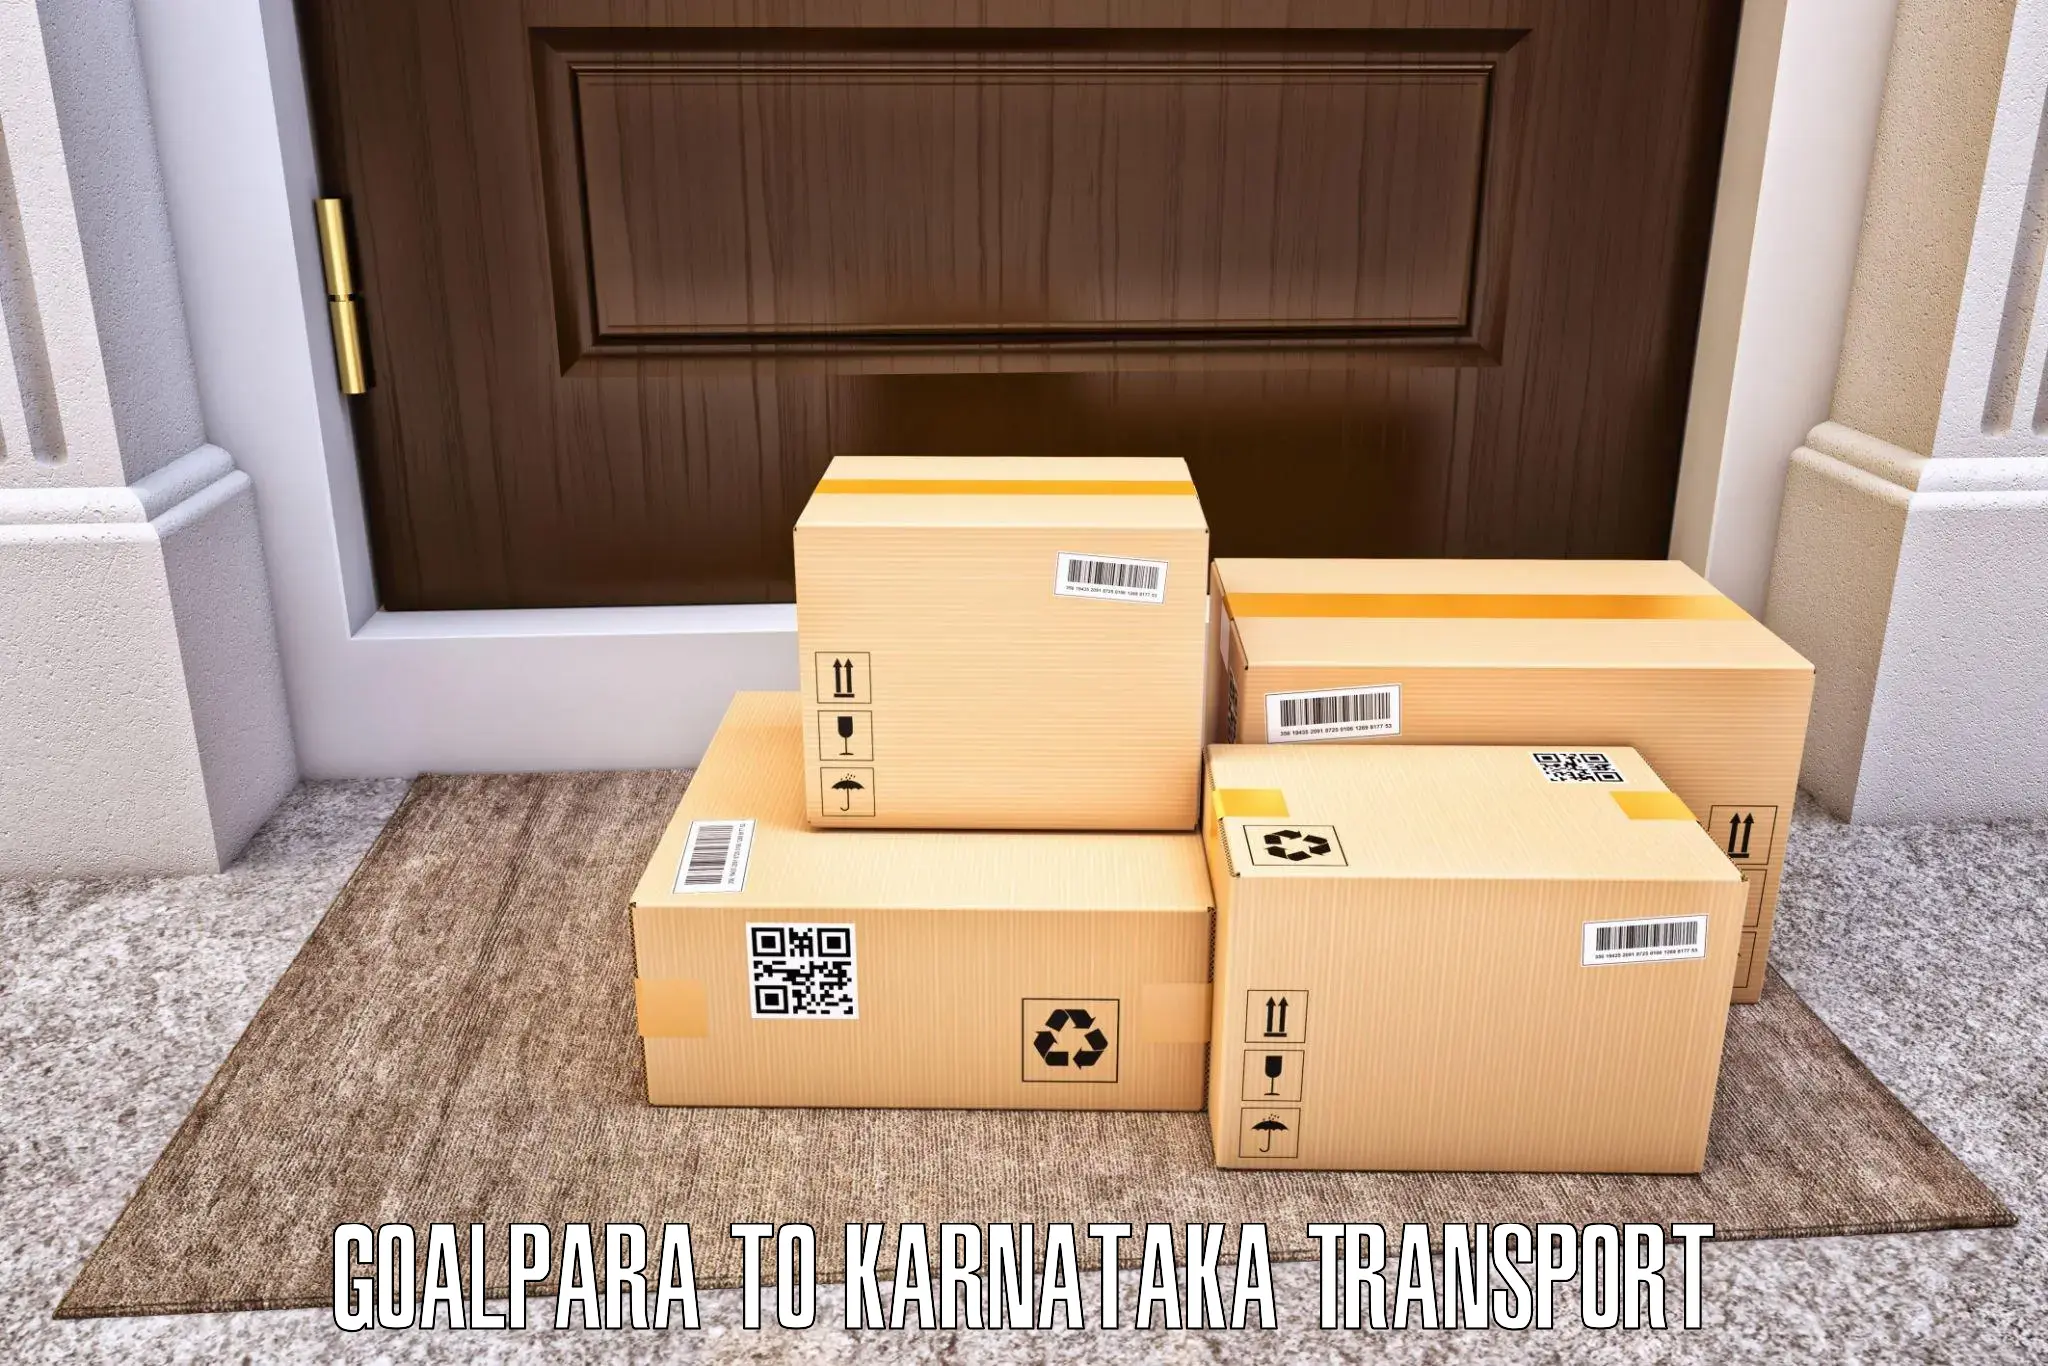 Transport in sharing Goalpara to Kodagu